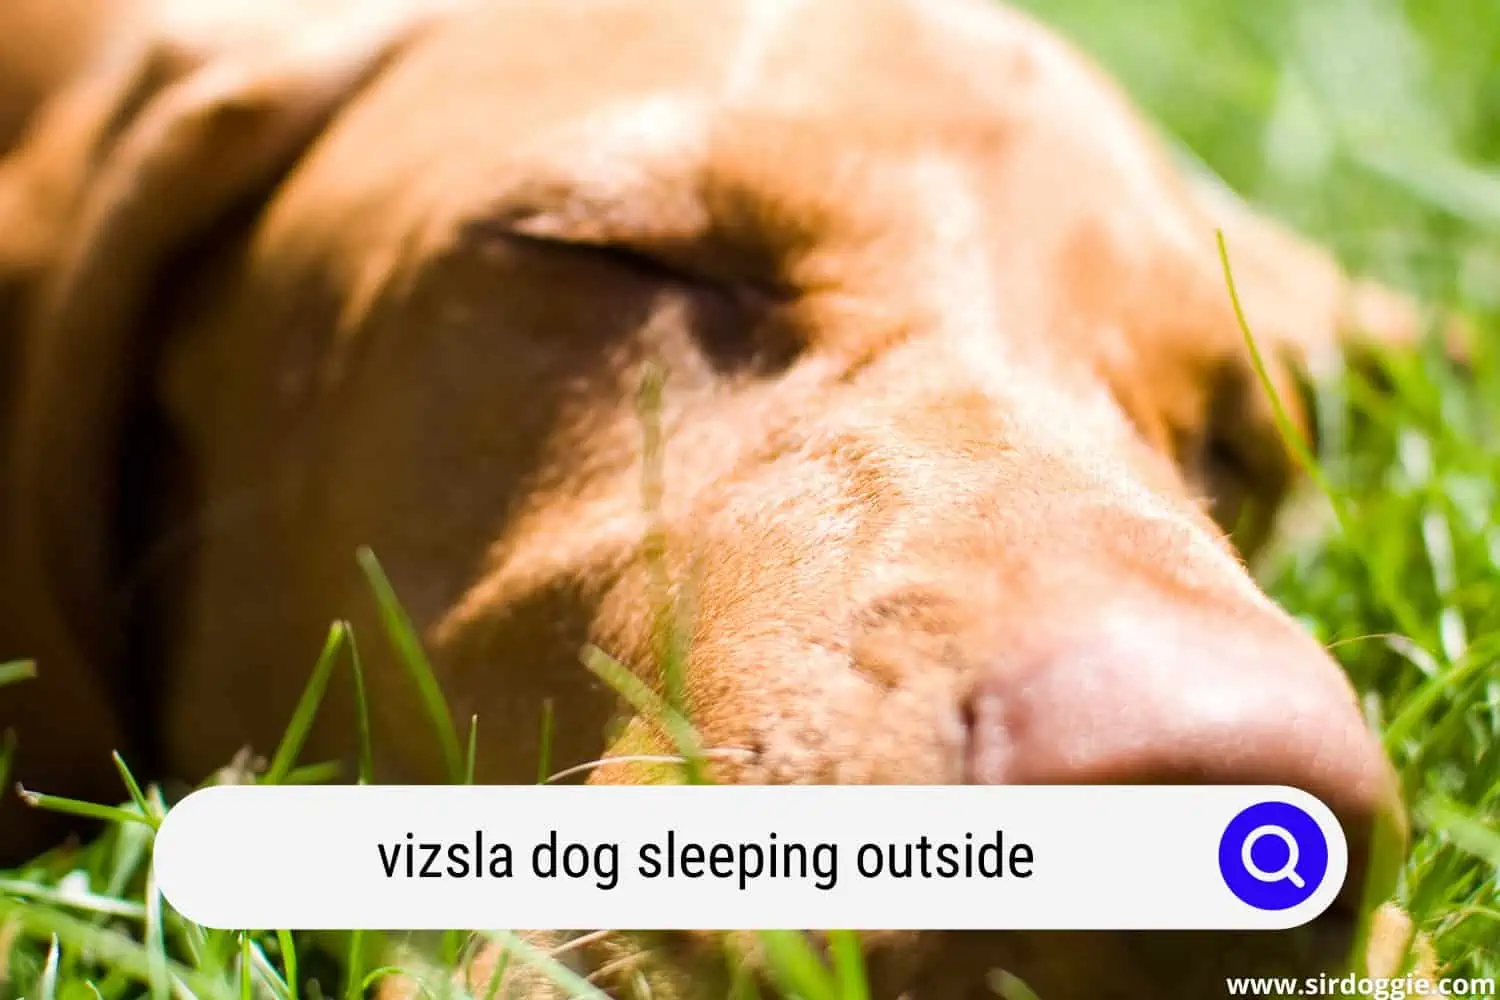 Vizsla dog sleeping outside in the grass